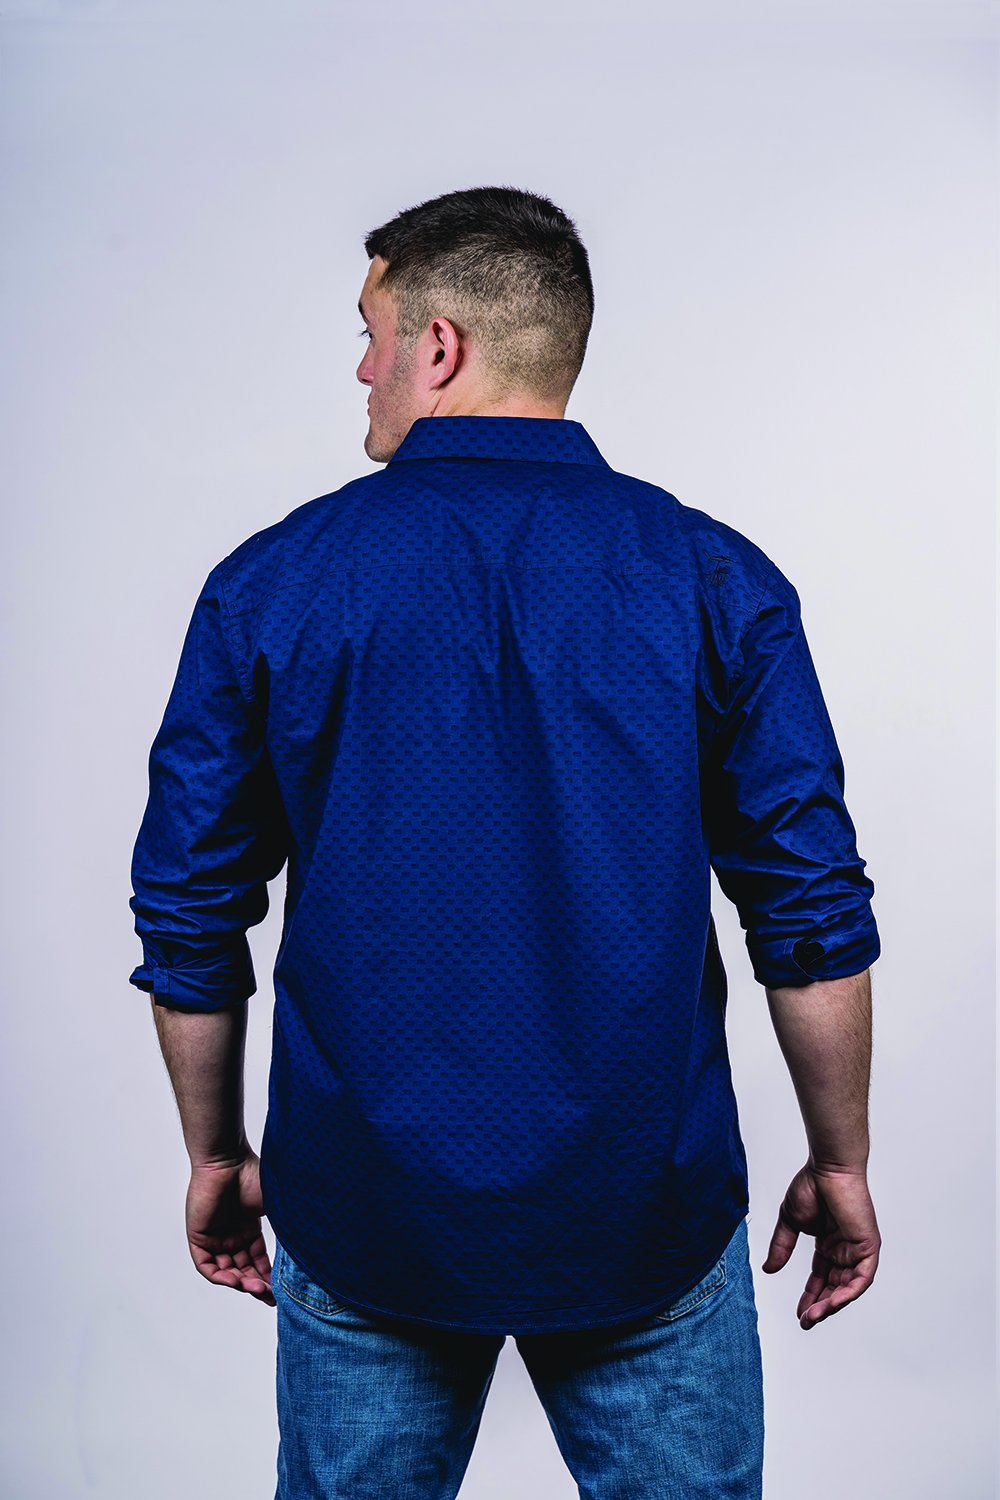 Men's Button Up Shirt [ON SALE] - Nine Line Apparel